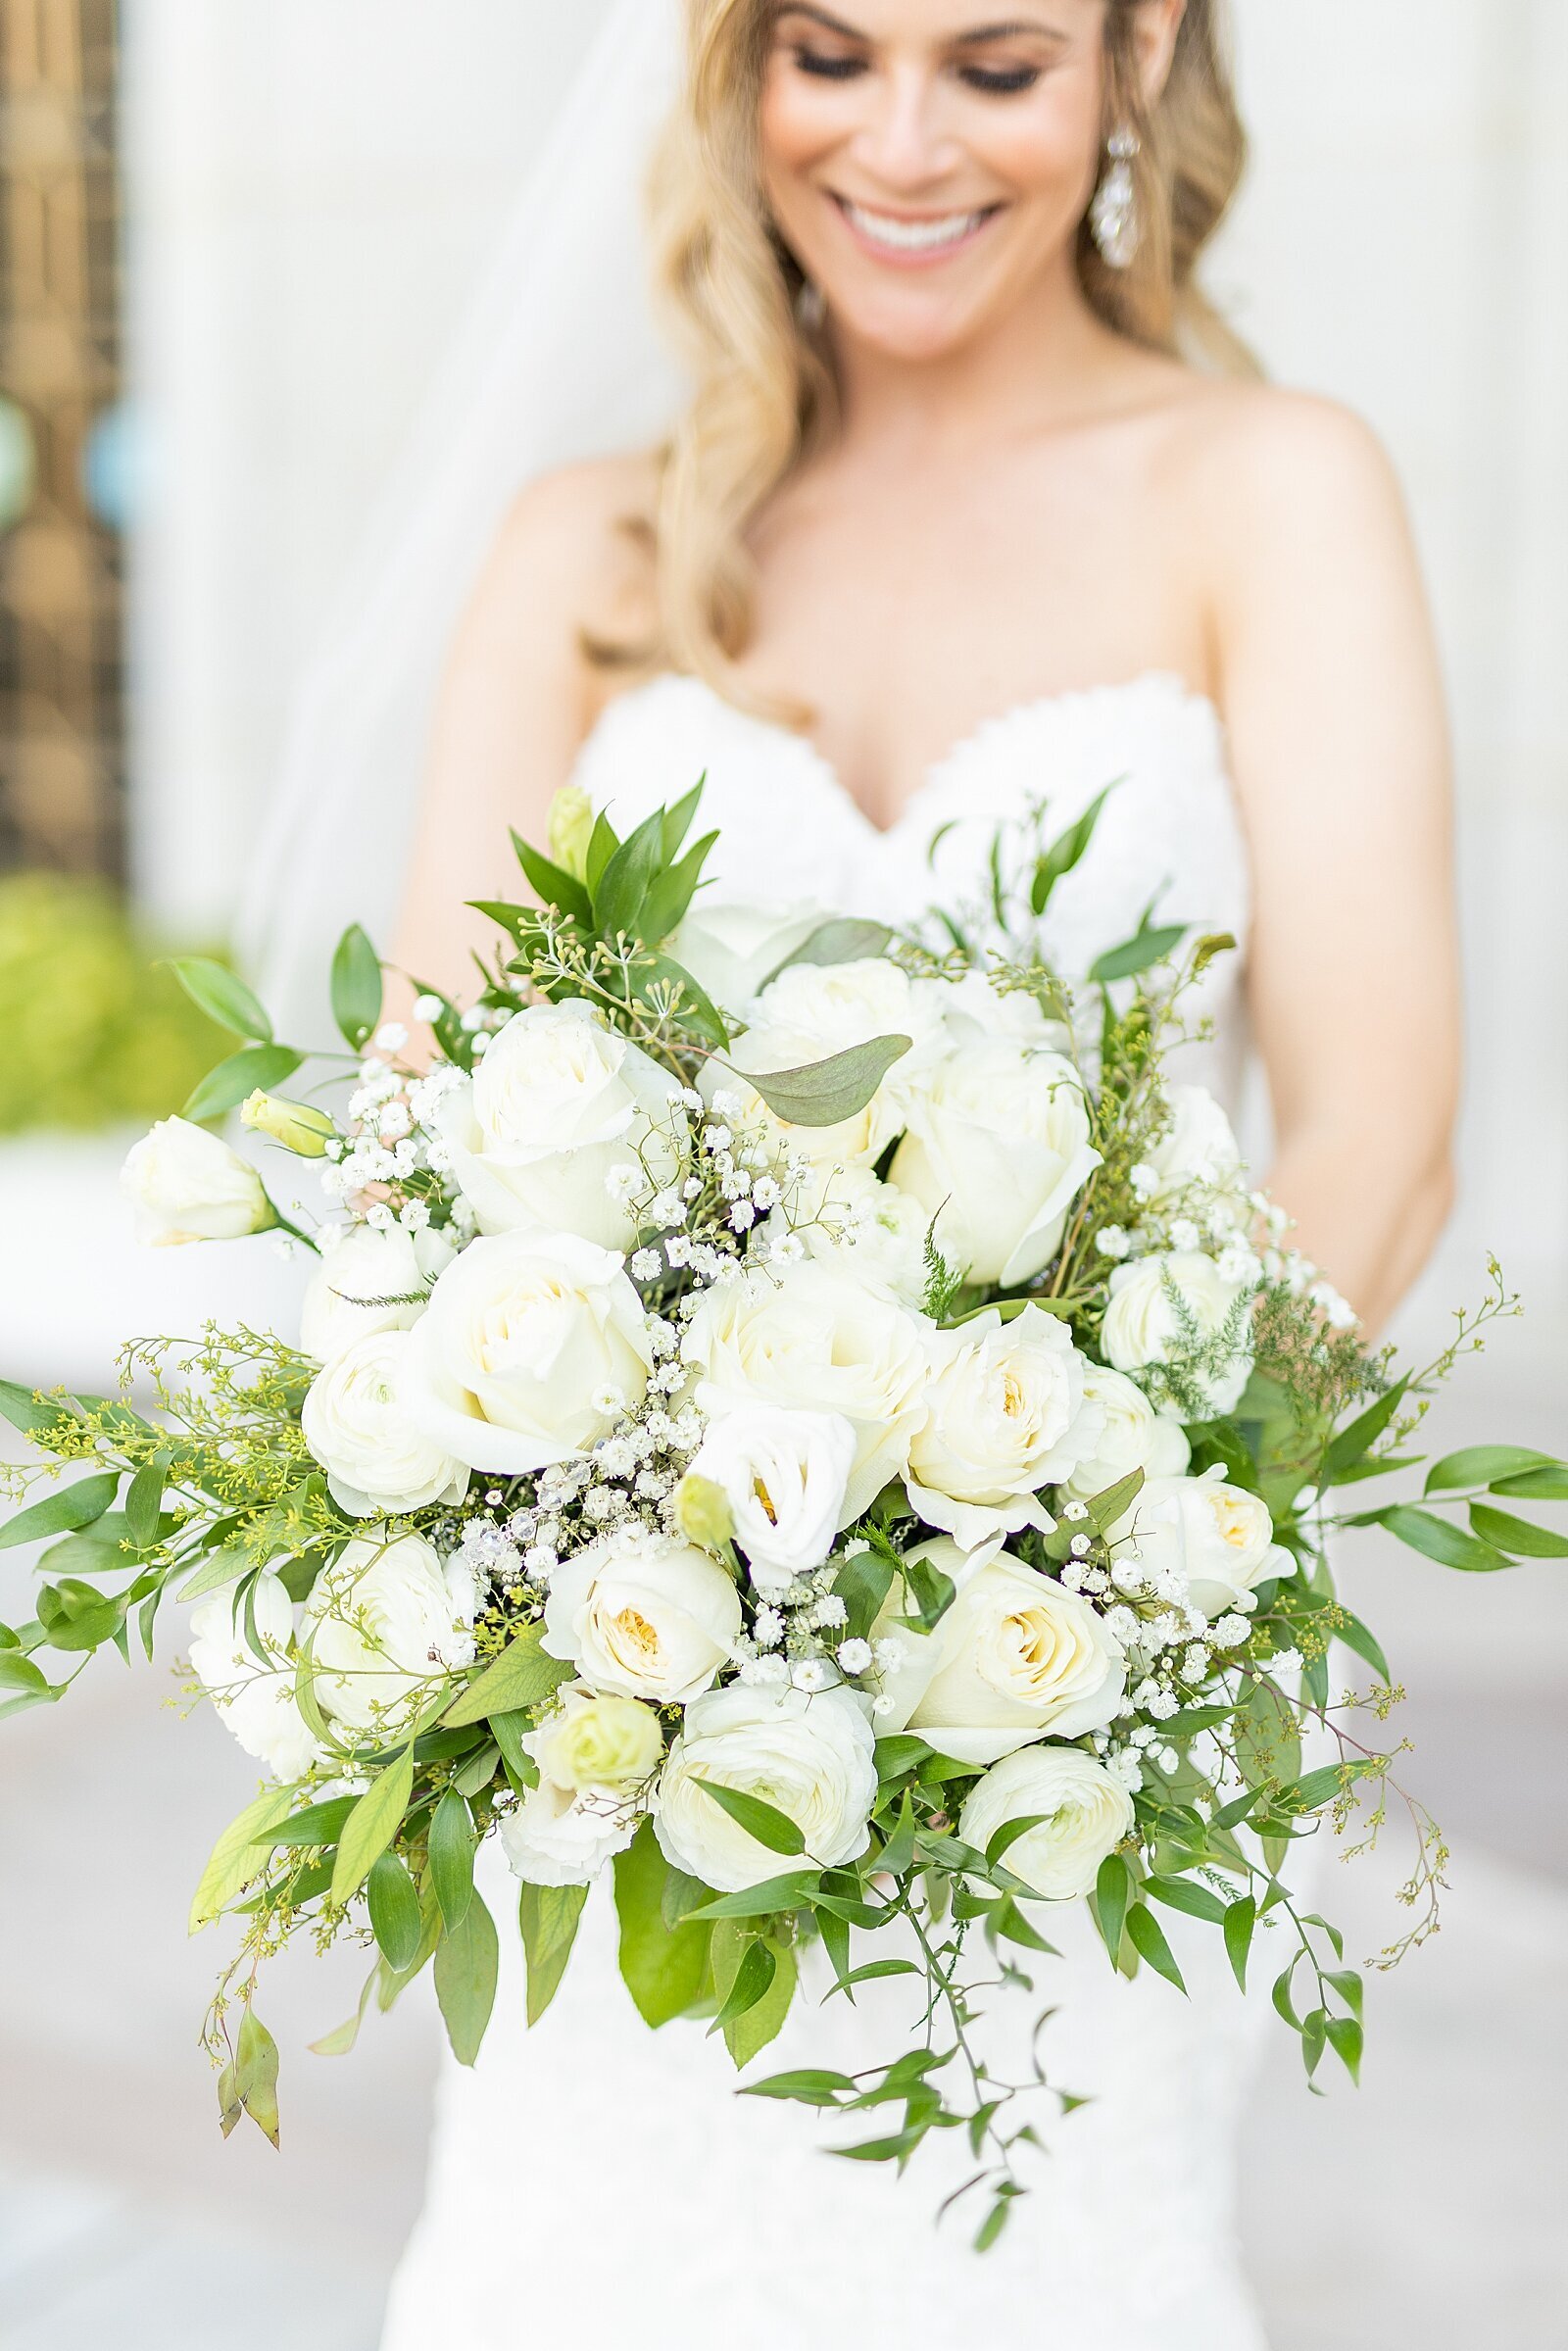 Bride holding large white bridal bouquet.